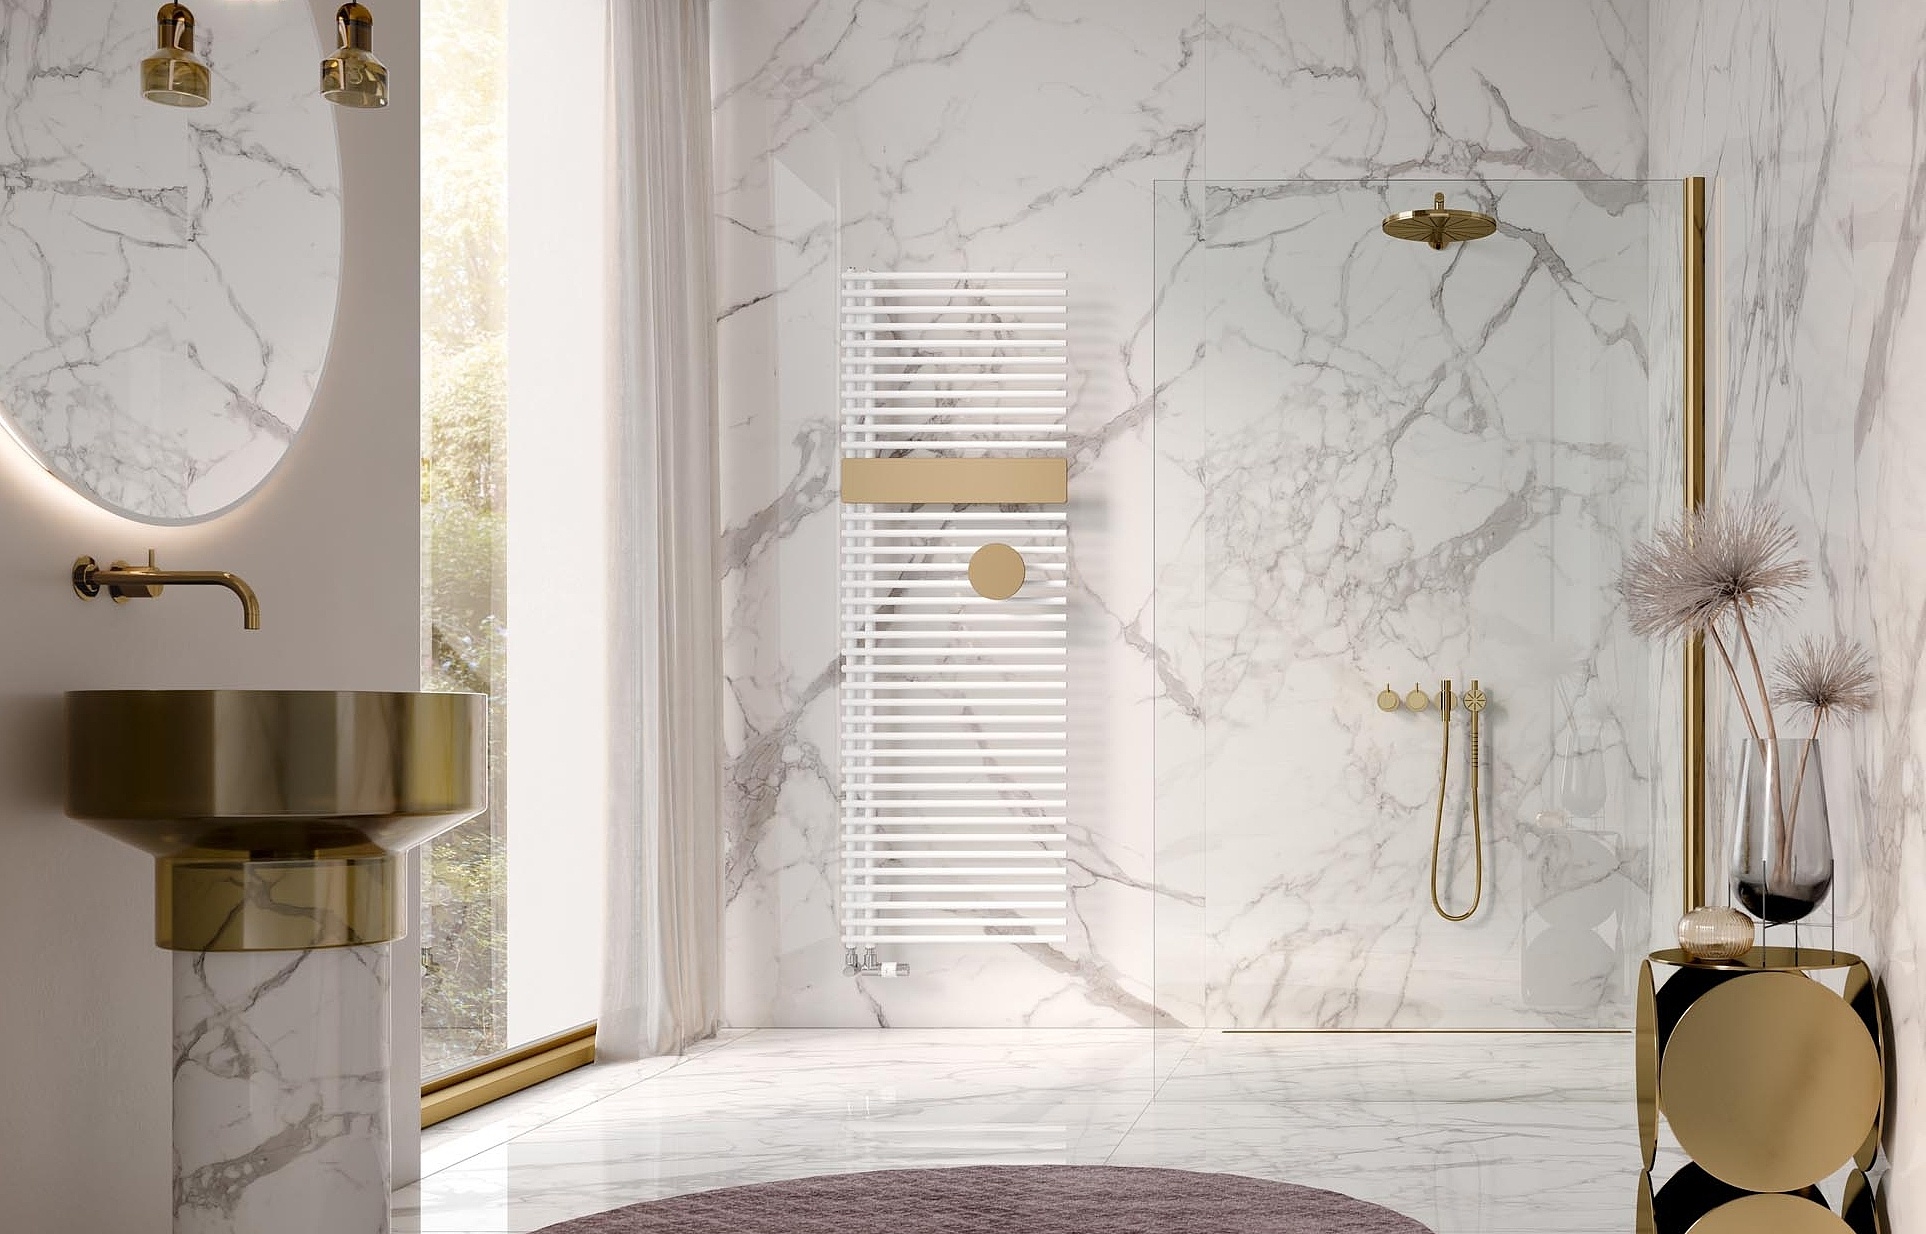 Kermi Credo Half round design and bathroom radiators – open at the side for optimum convenience.